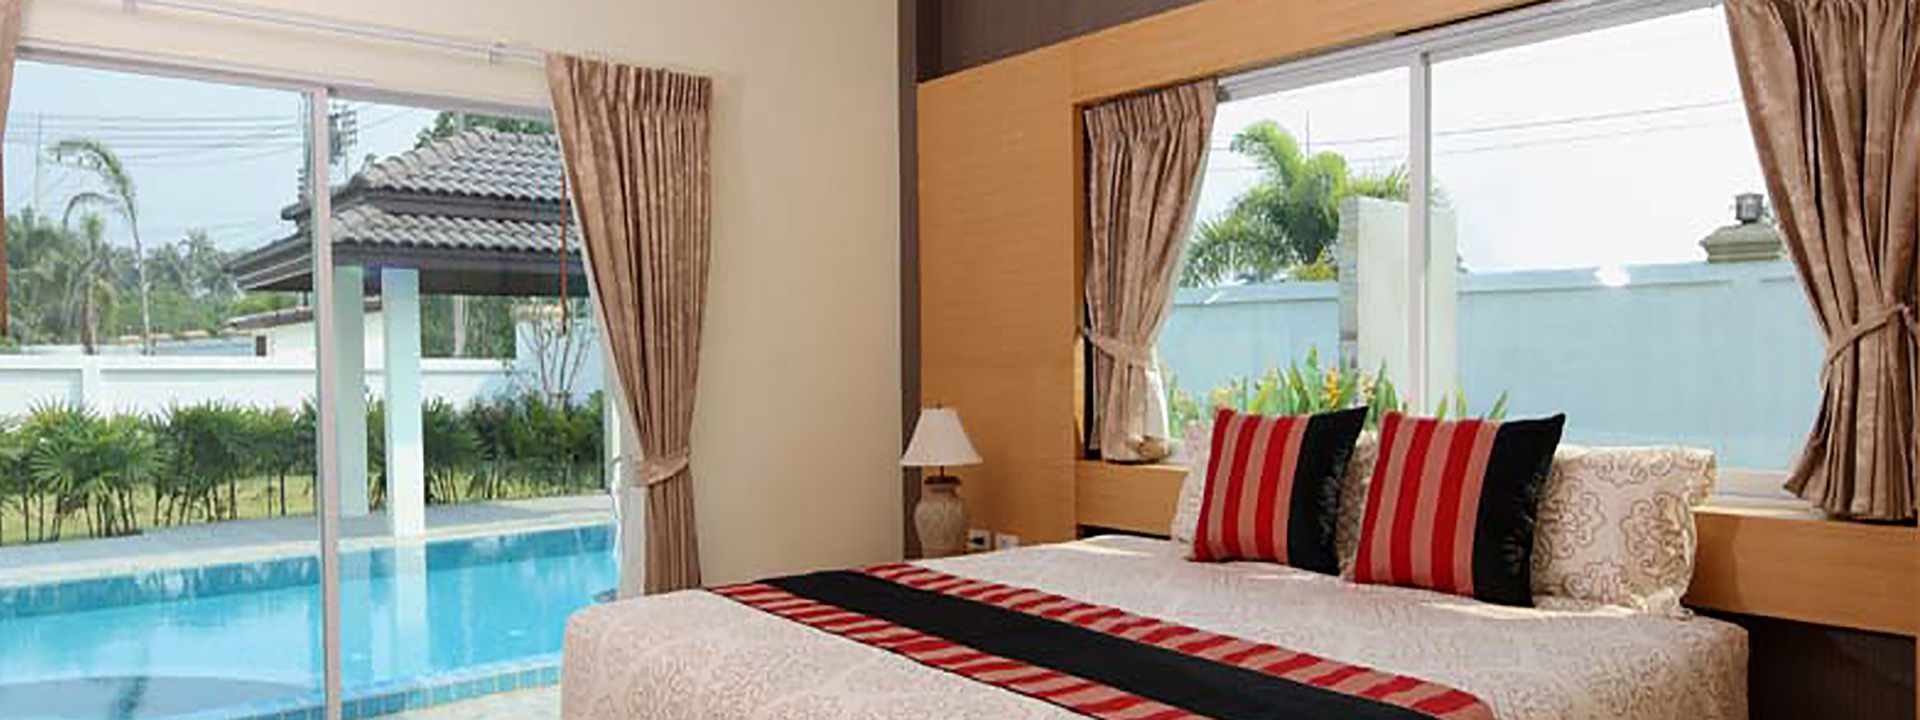 Luxury Pool Villas Resort near Ramayana Water Park in Na Jomtien area Pattaya.